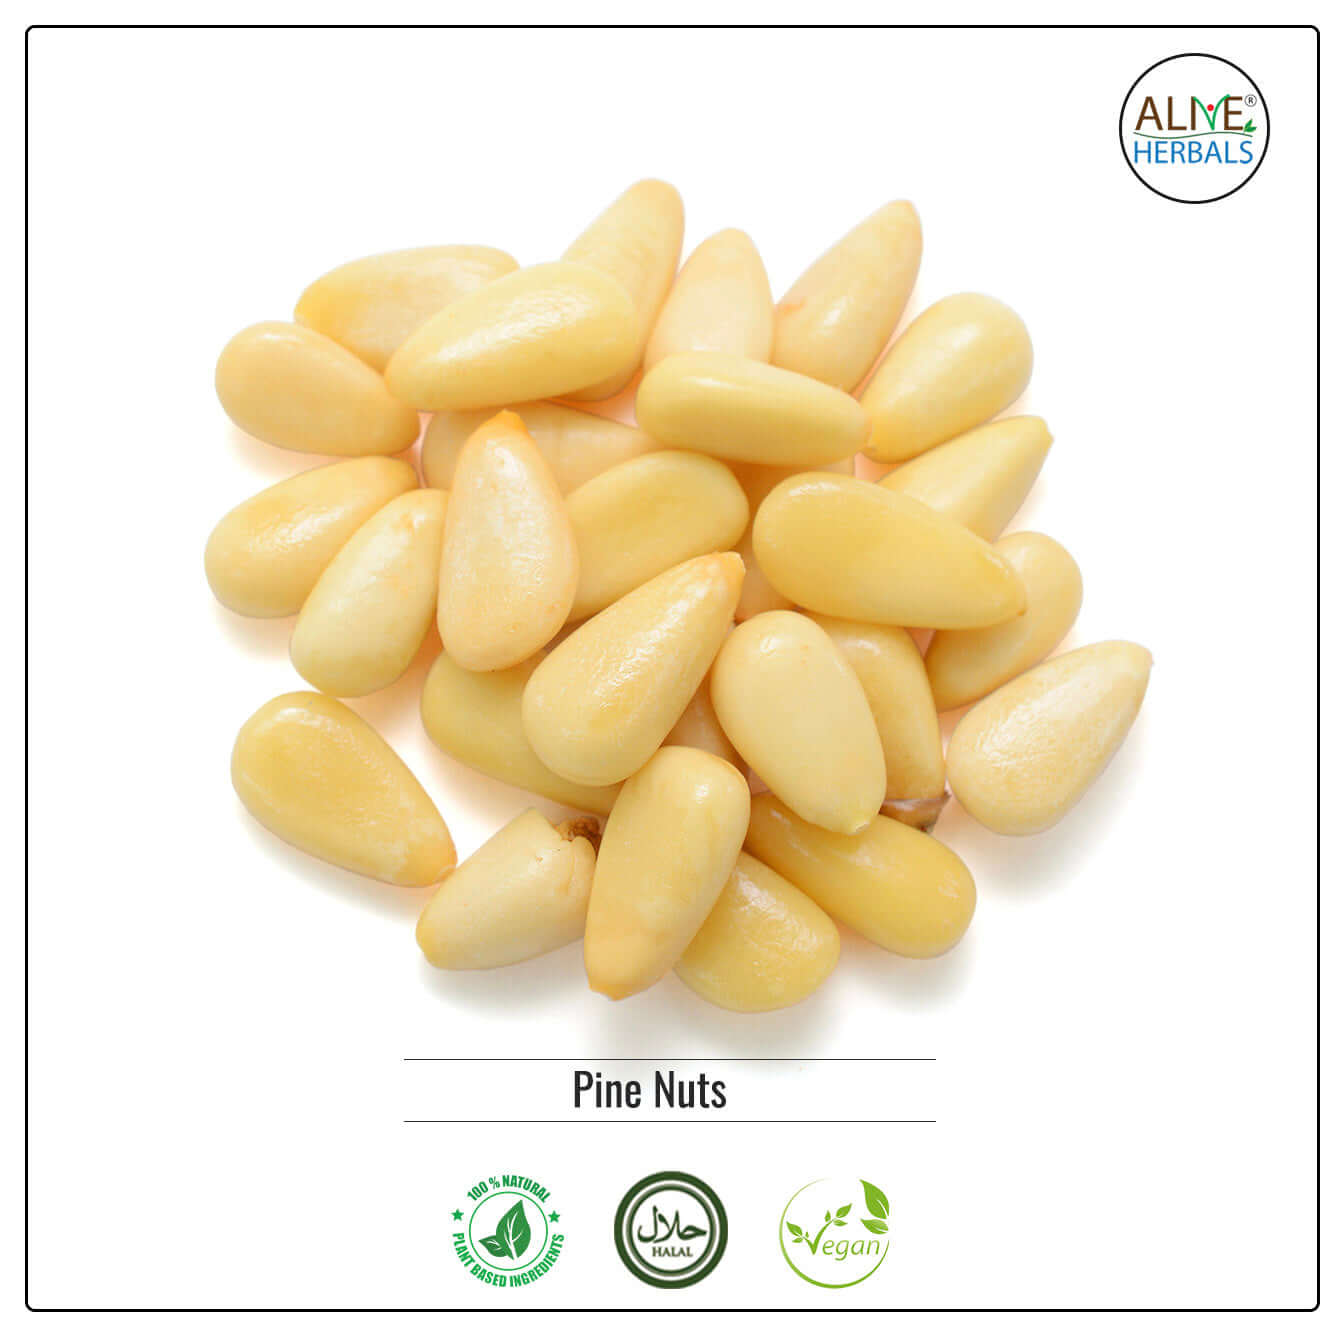 Raw Pine Nuts - Buy at Natural Food Store | Alive Herbals.